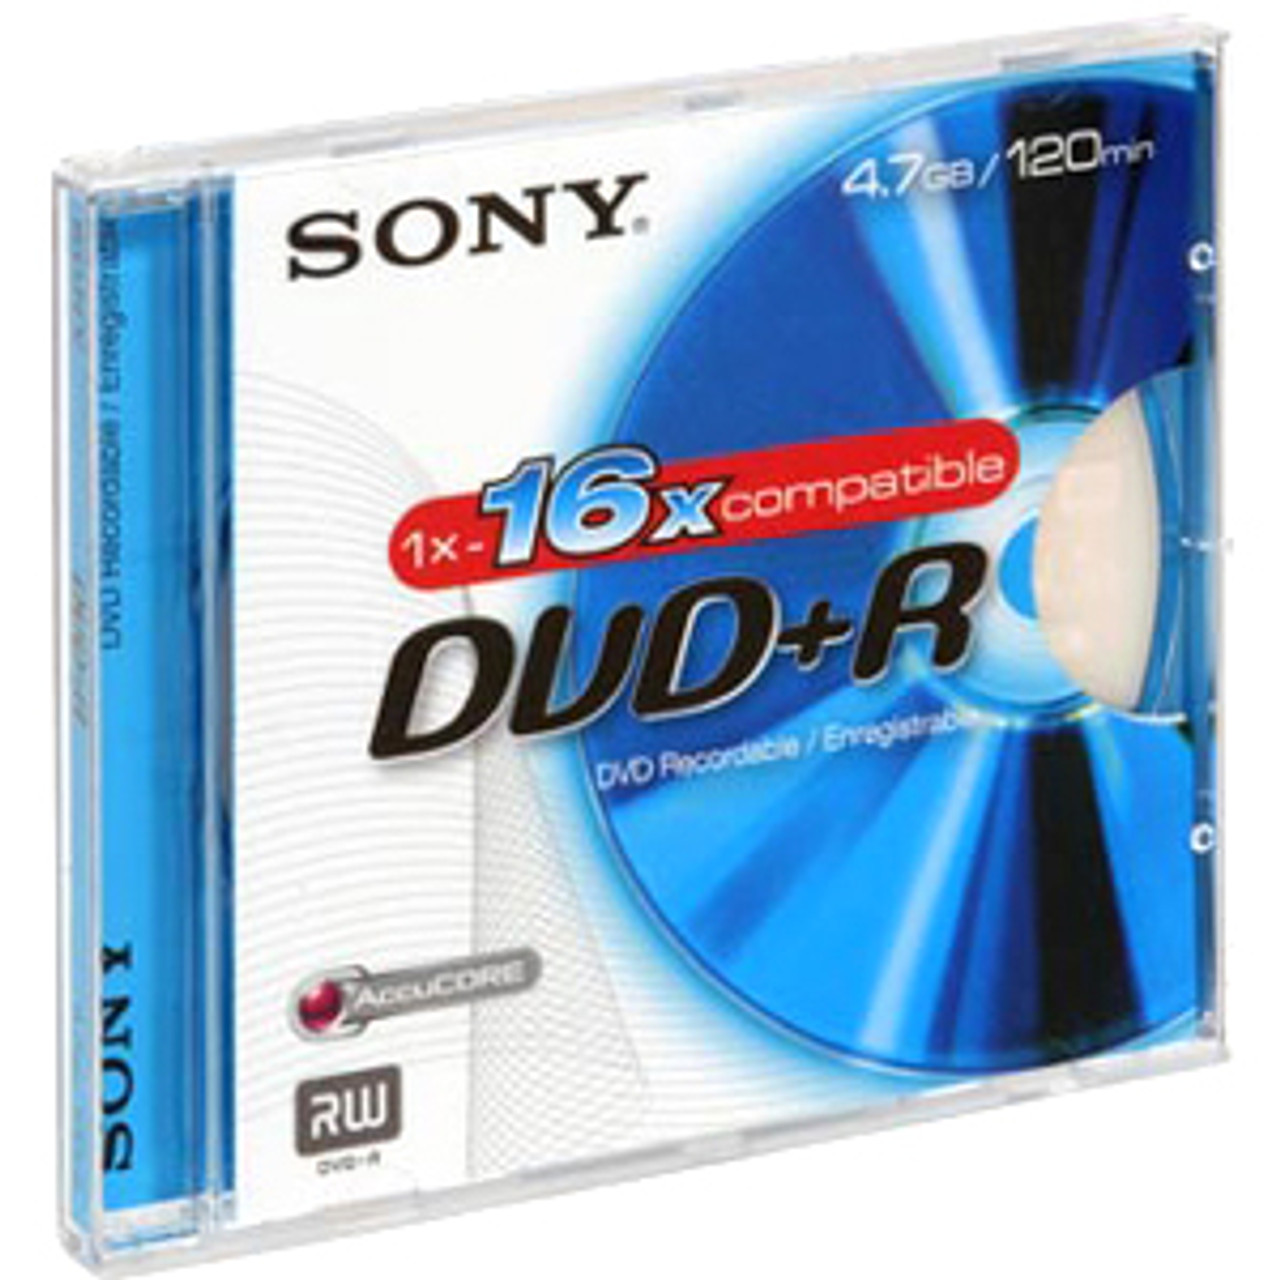 DPR85L1 - Sony 2.4x dvd+R Media - 8.5GB - 1 Pack